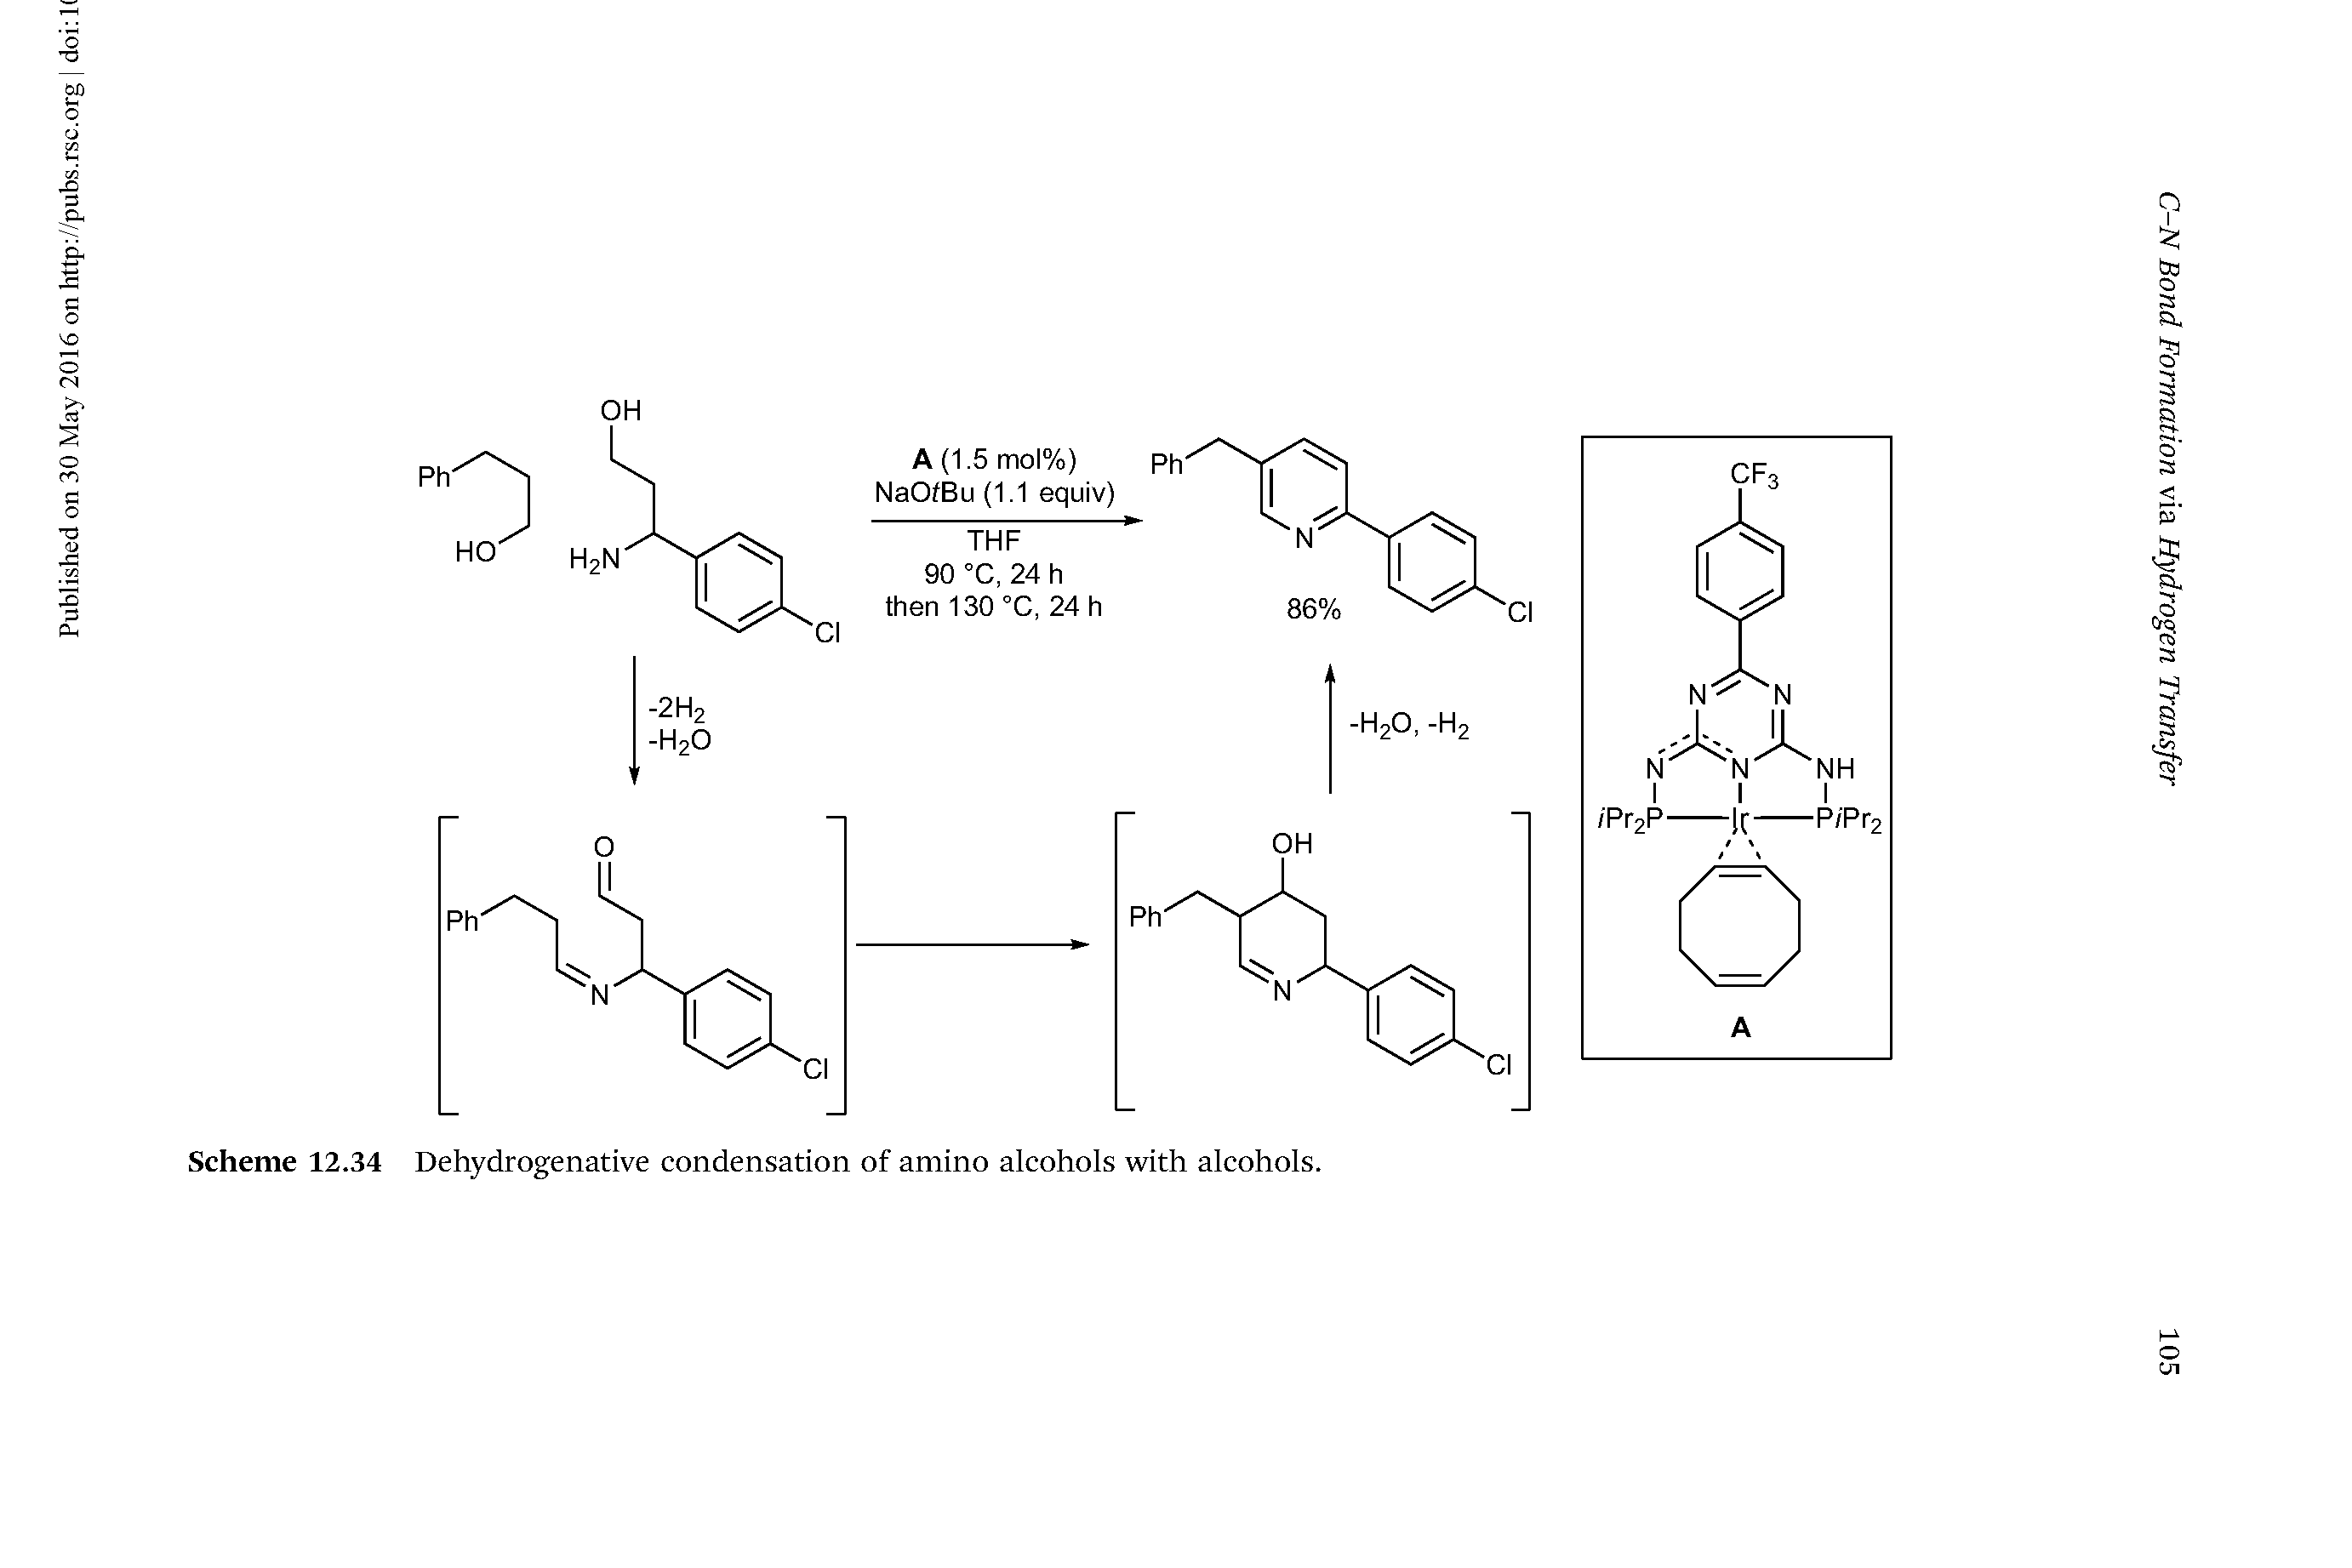 Scheme 12.34 Dehydrogenative condensation of amino alcohols with alcohols.